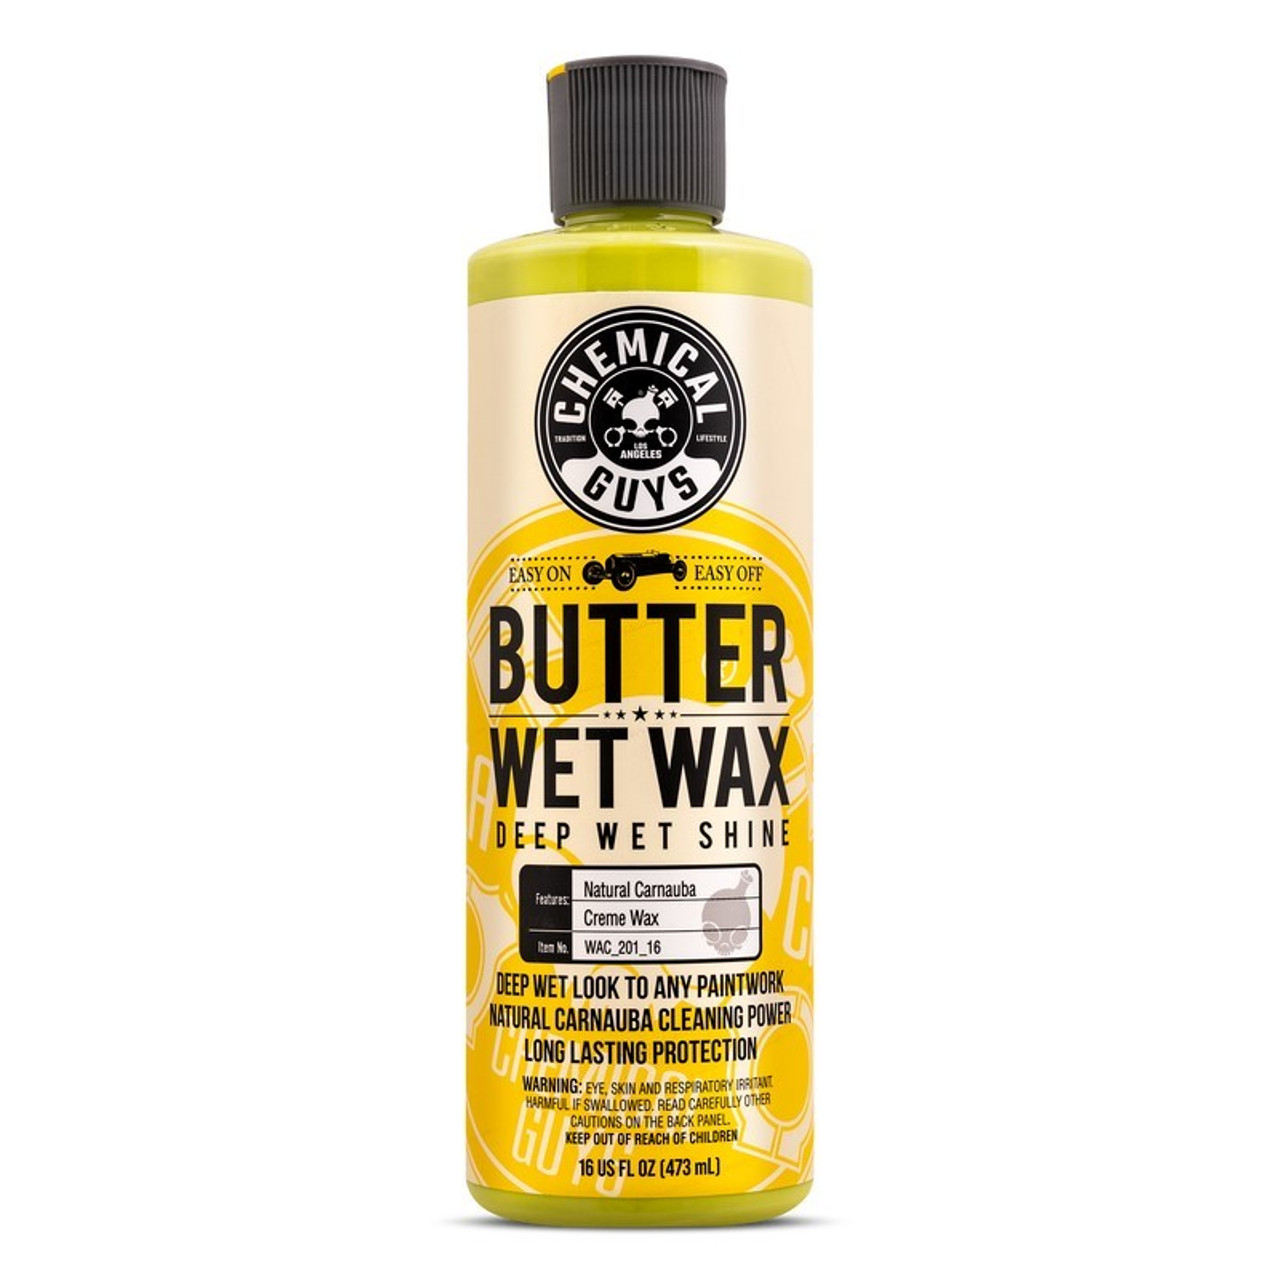 Chemical Guys Wac_201 - Butter Wet Wax (1 gal)